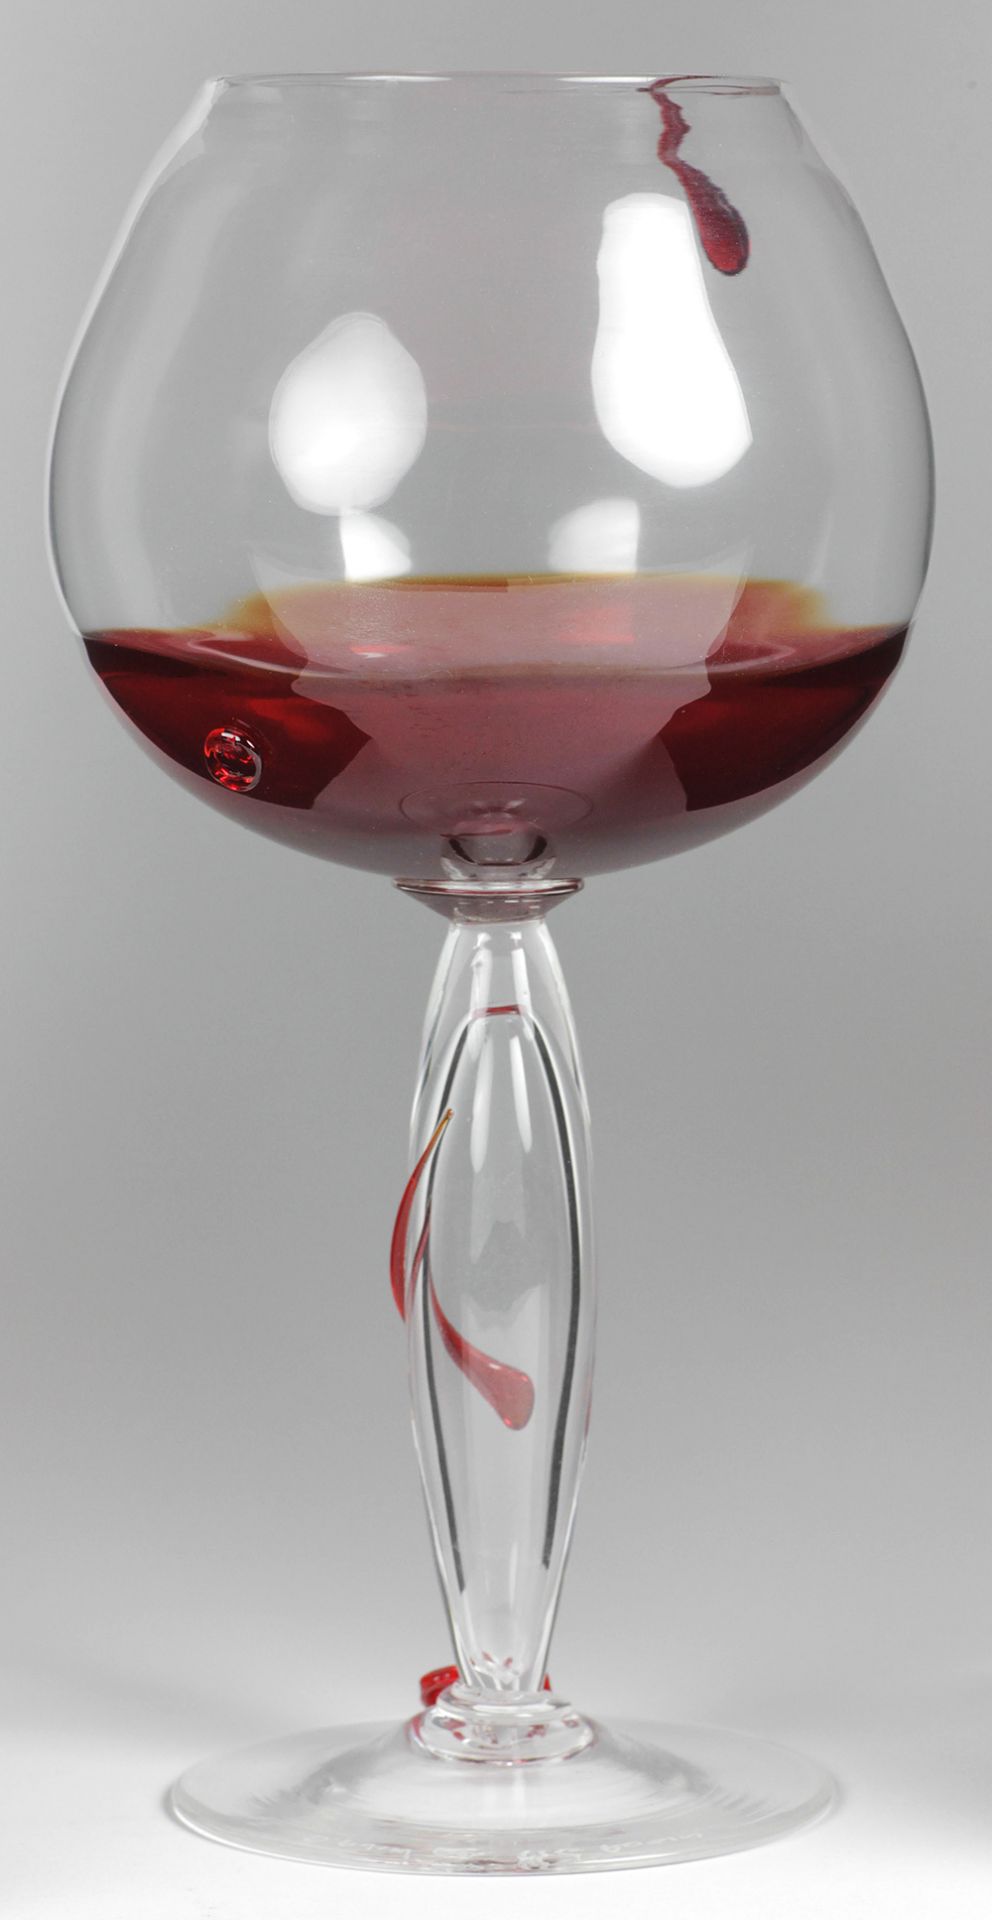 Limited Edn Venetain 'Gocce' Artistic Wine Glass By Maria Grazia Rosin 2004 - Image 3 of 12